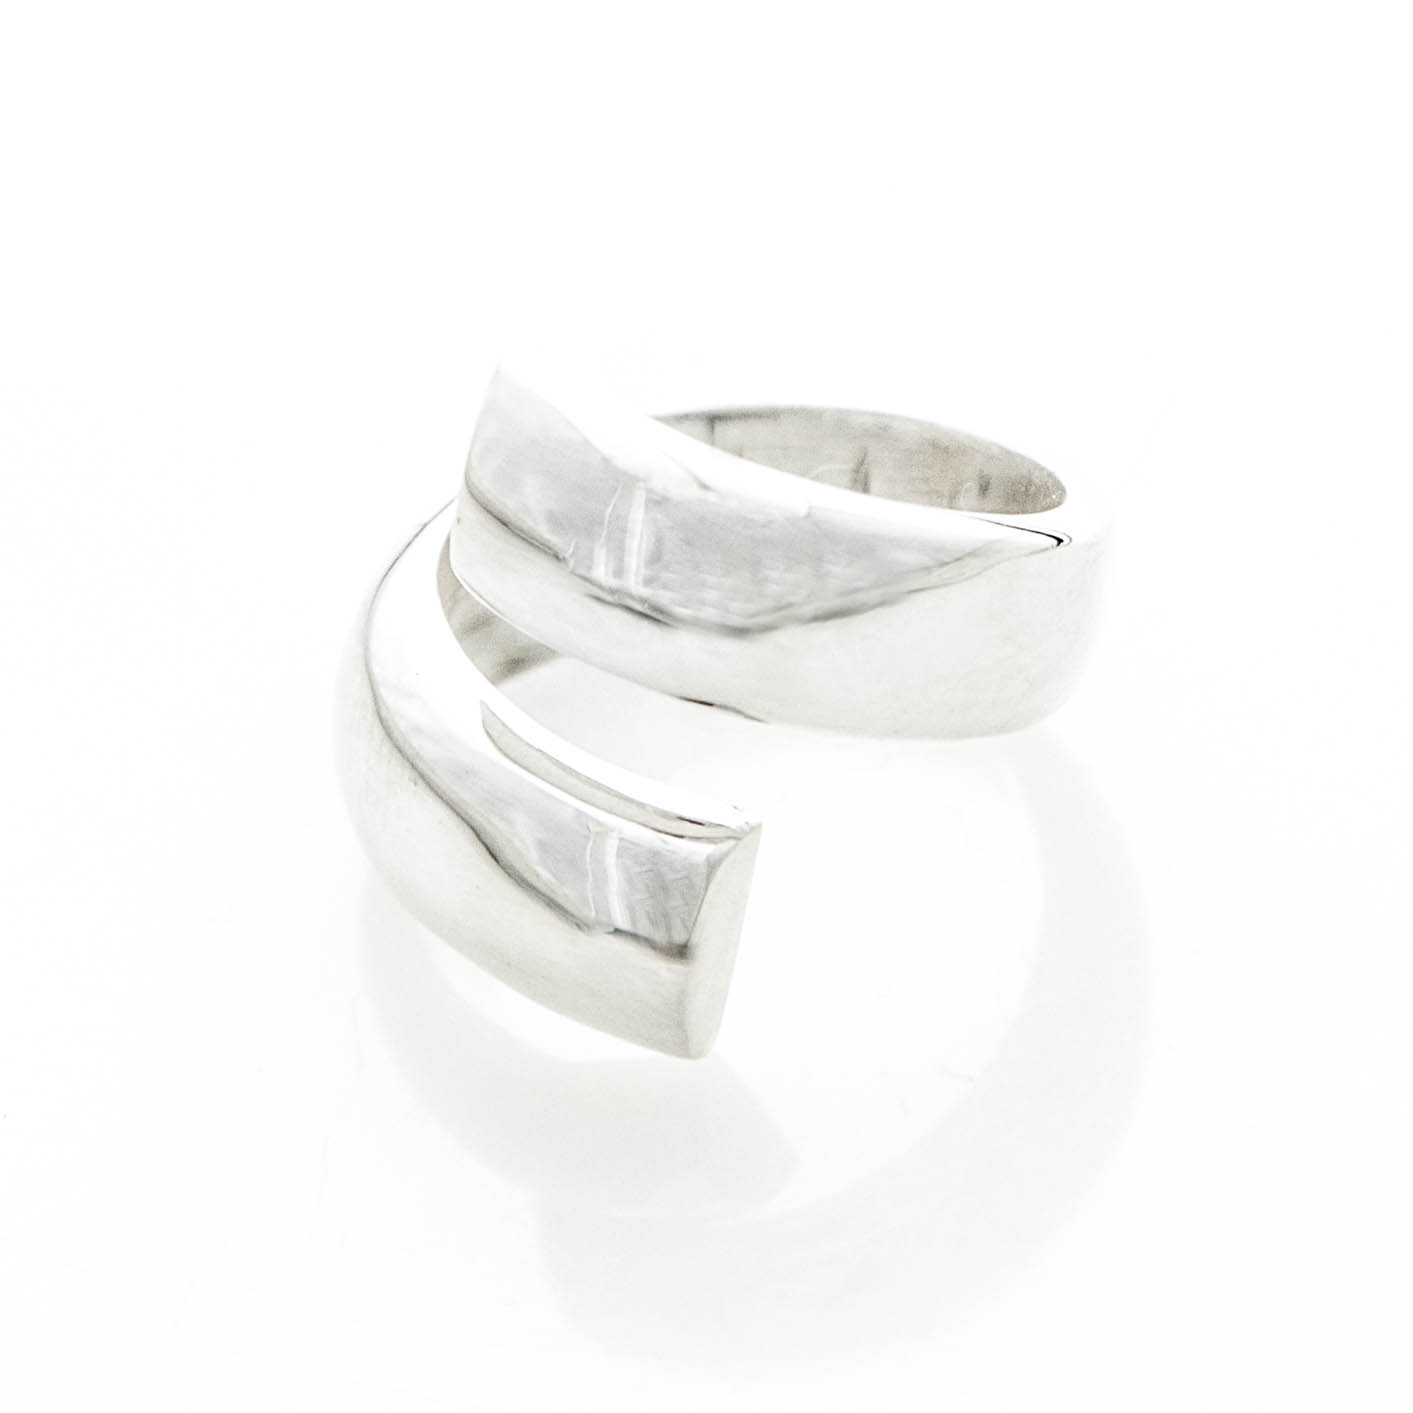 Siesta Silver Jewelry Wrap Ring in Sterling Silver